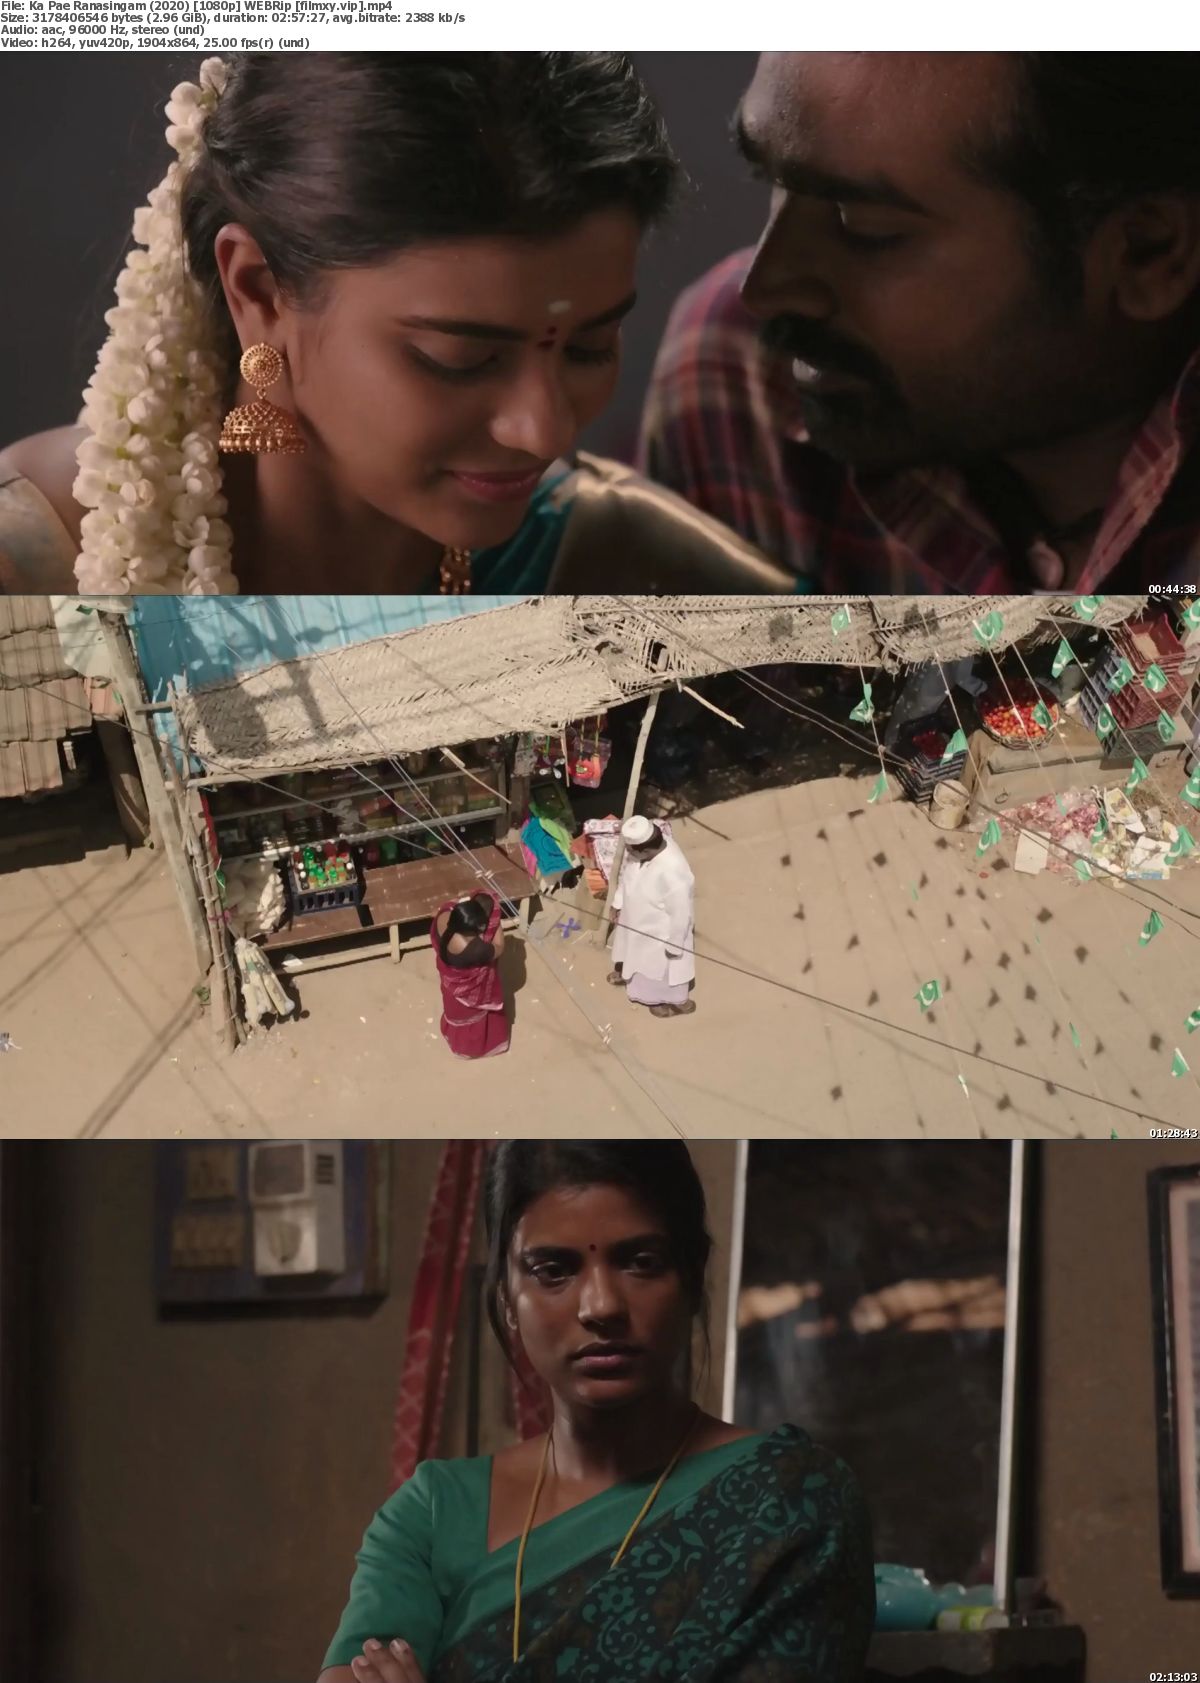 Watch Ka Pae Ranasingam (2020) Full Movie on Filmxy